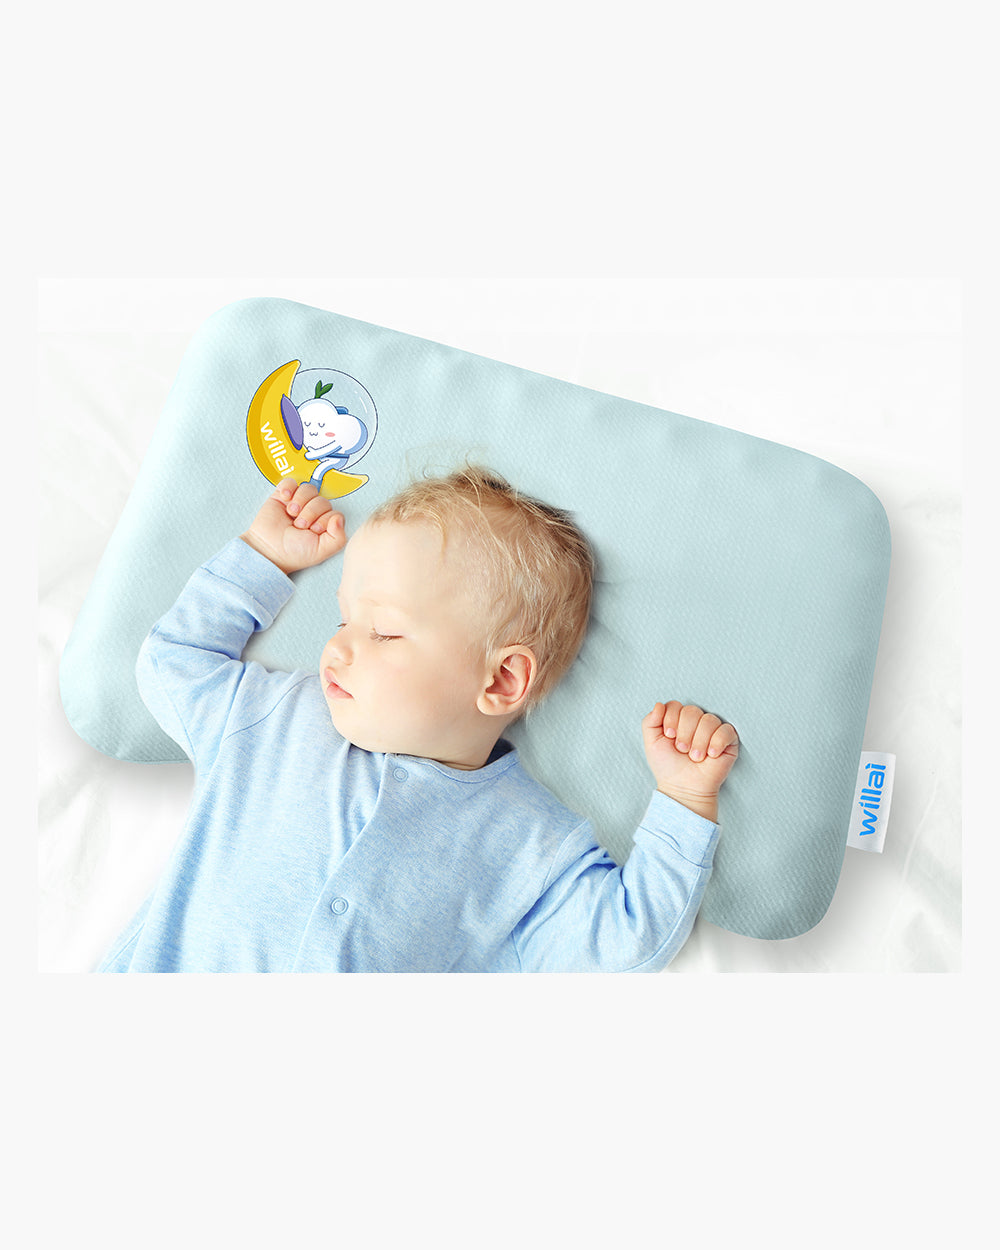 Willai 4D Nano Slicone Baby Pillow For Sleeping 7